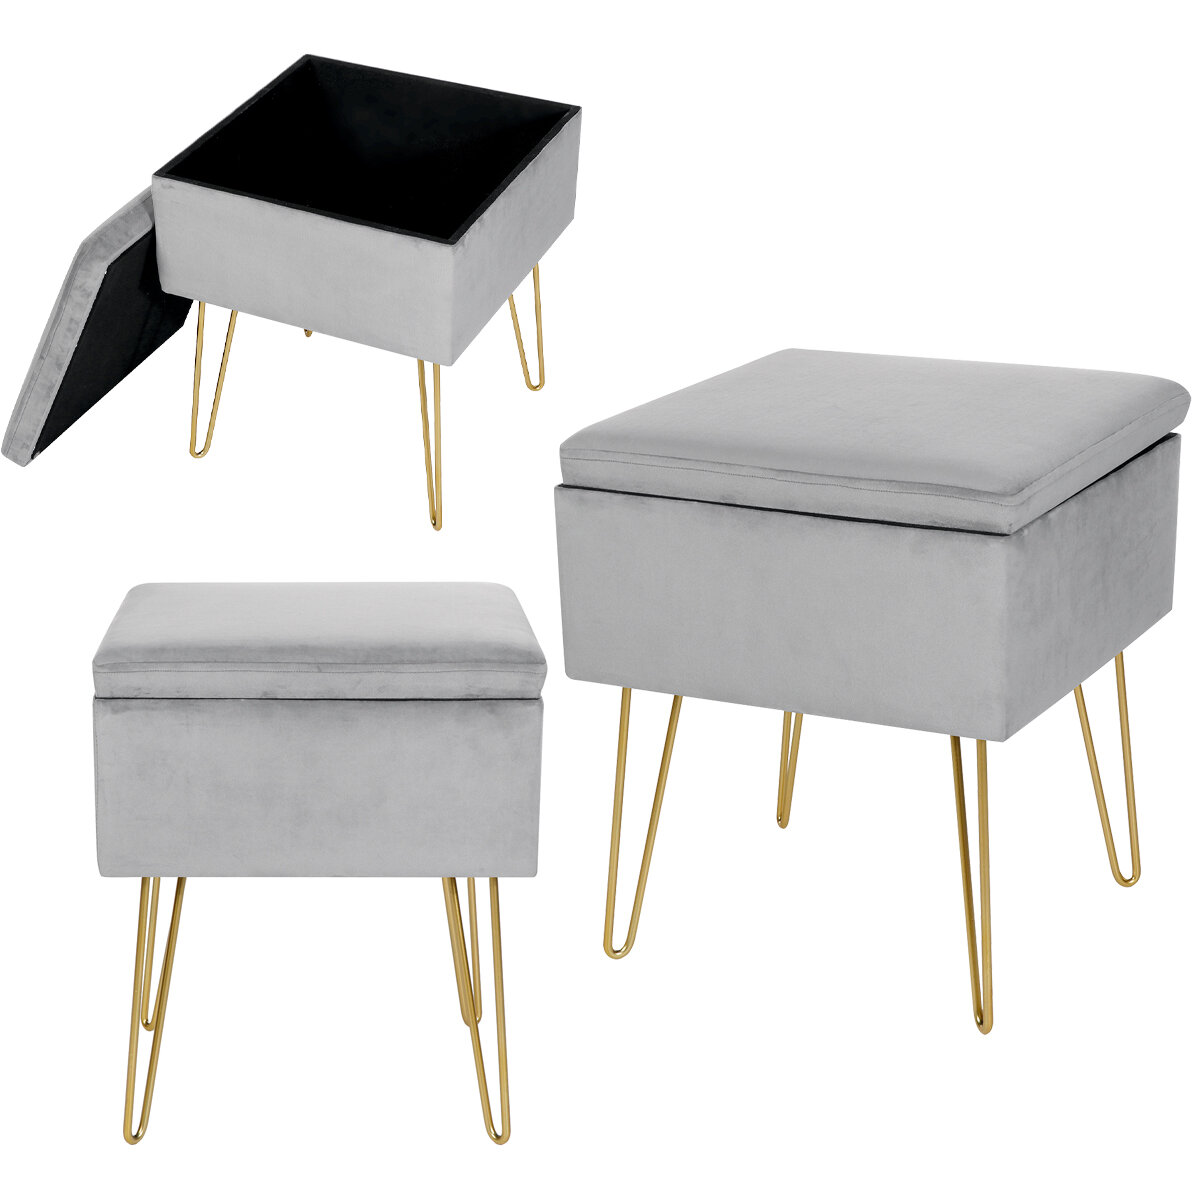 Fabric Velvet Storage Cube Tea Table Stool Creative Soft Iron Art Chair Footstool Seat Home Bedroom Supplies